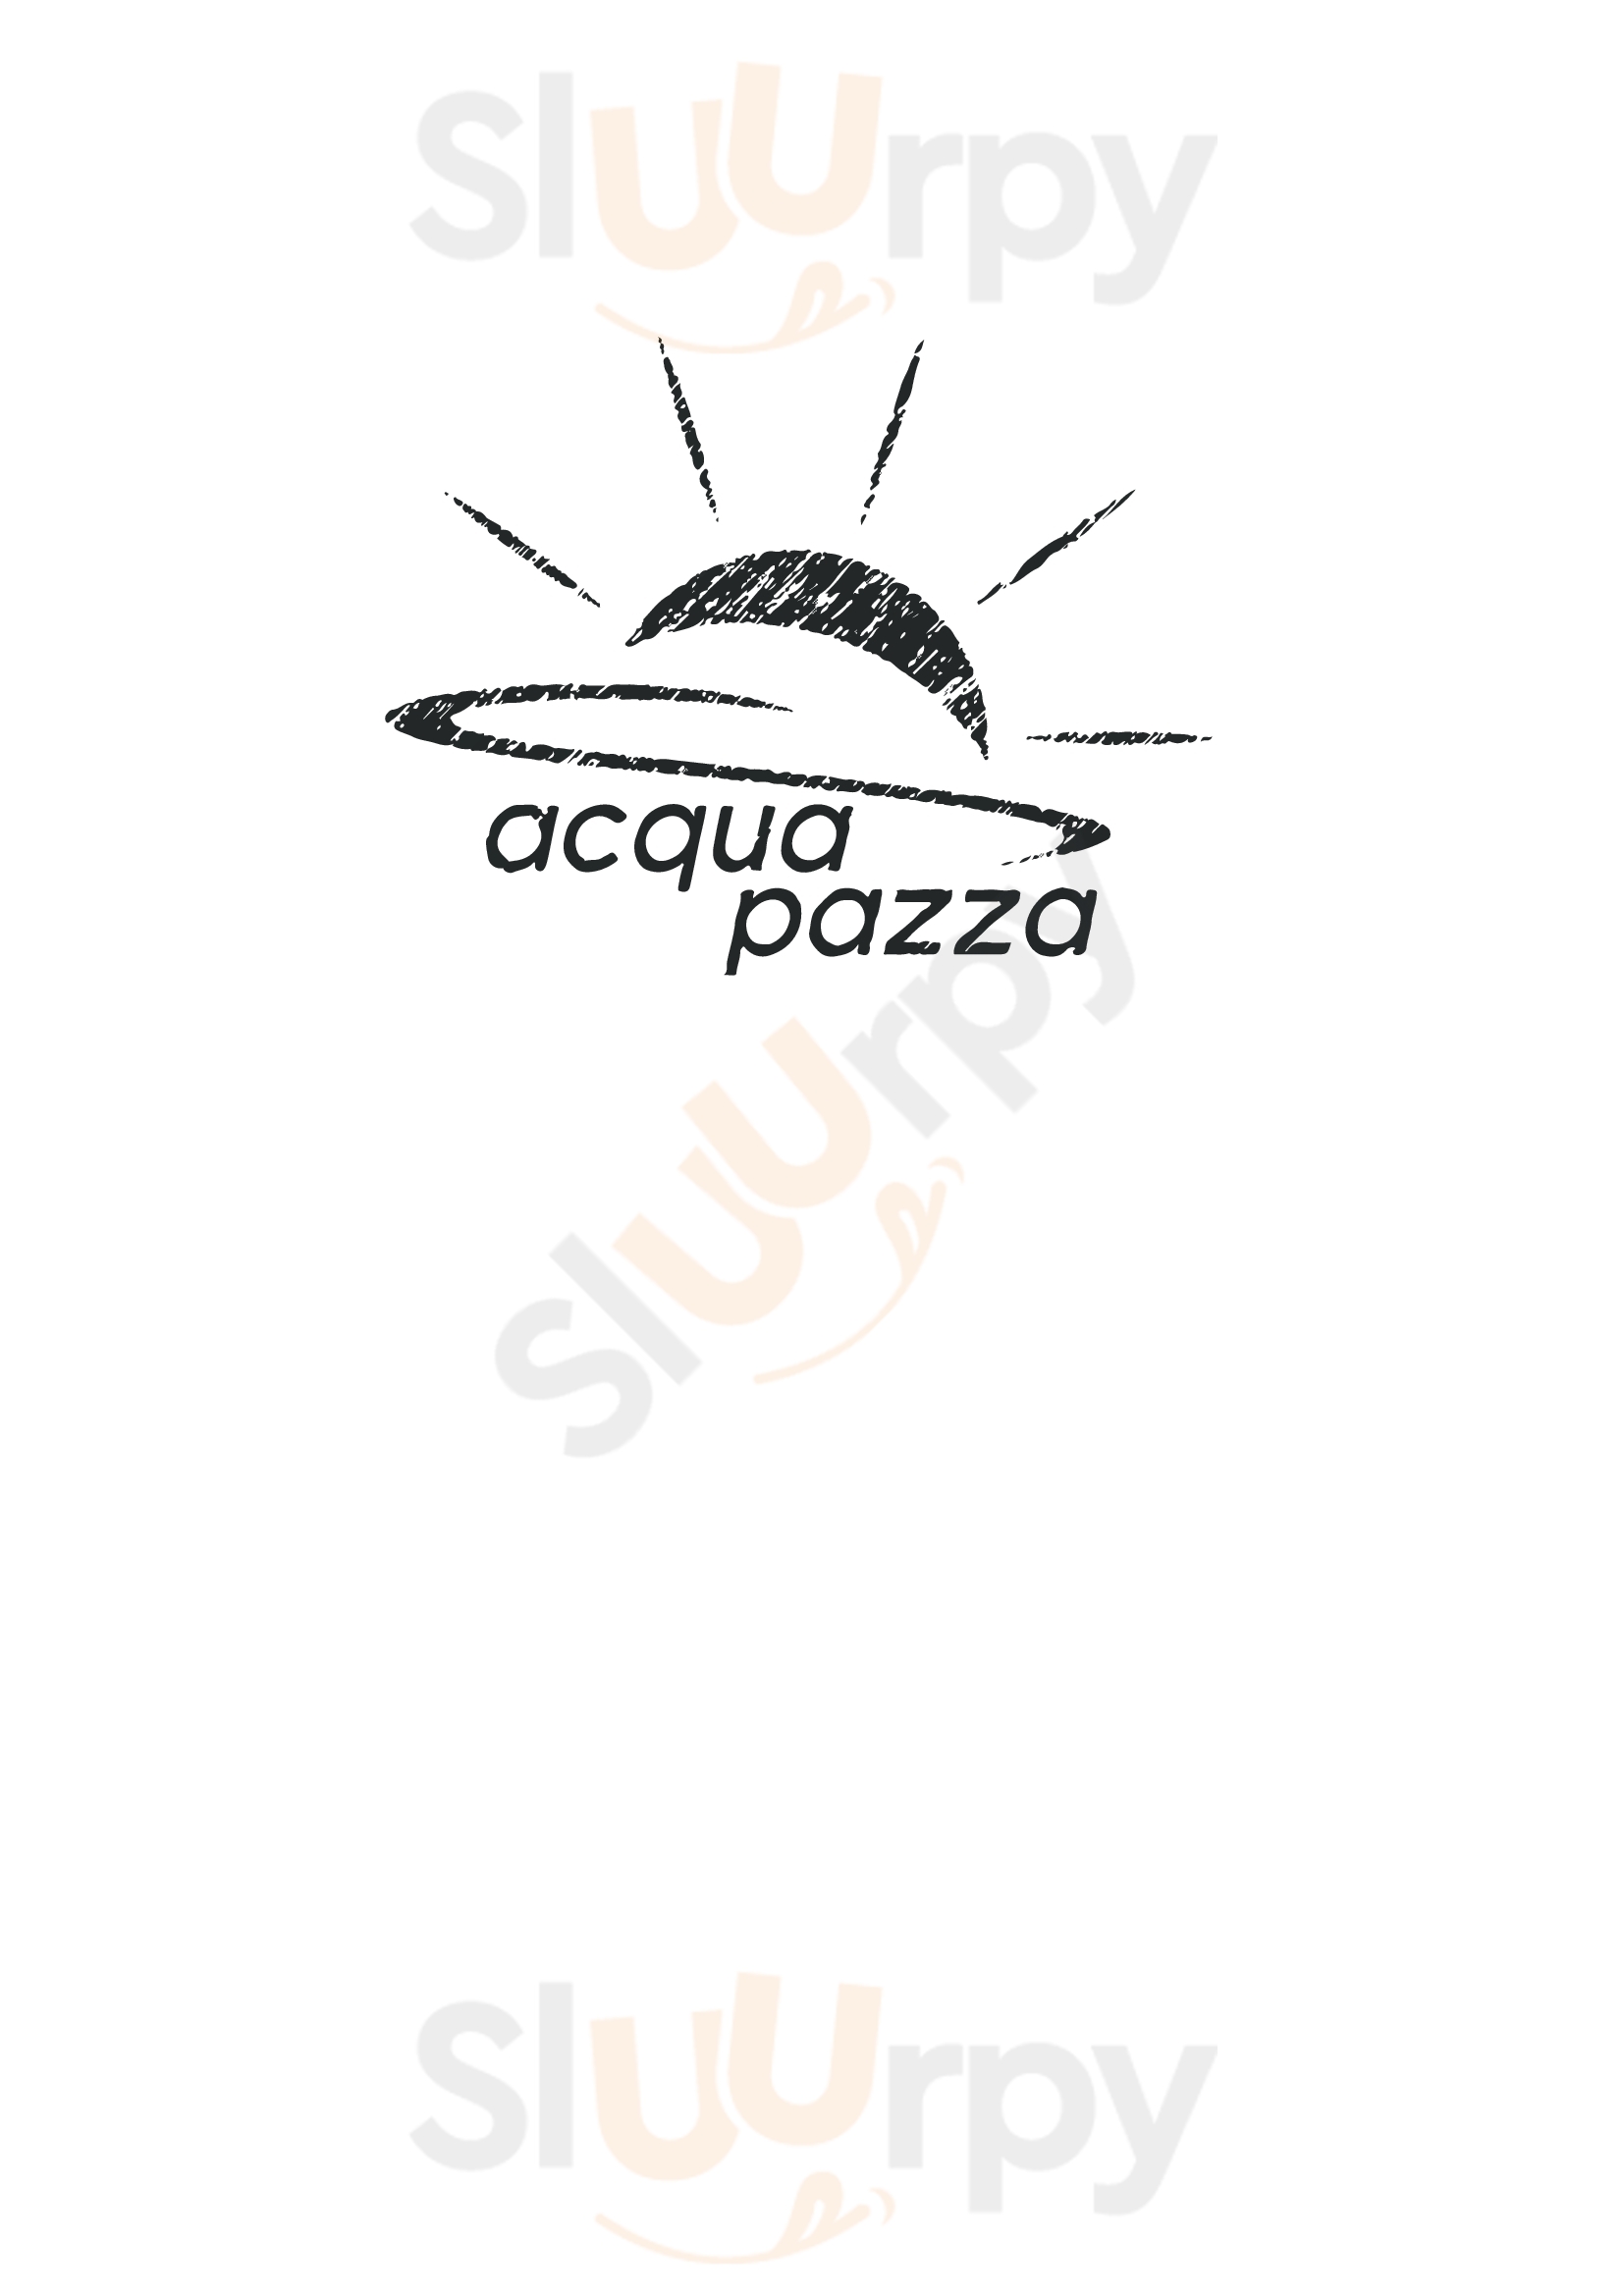 Acqua Pazza - Italian Restaurant Roskilde Menu - 1